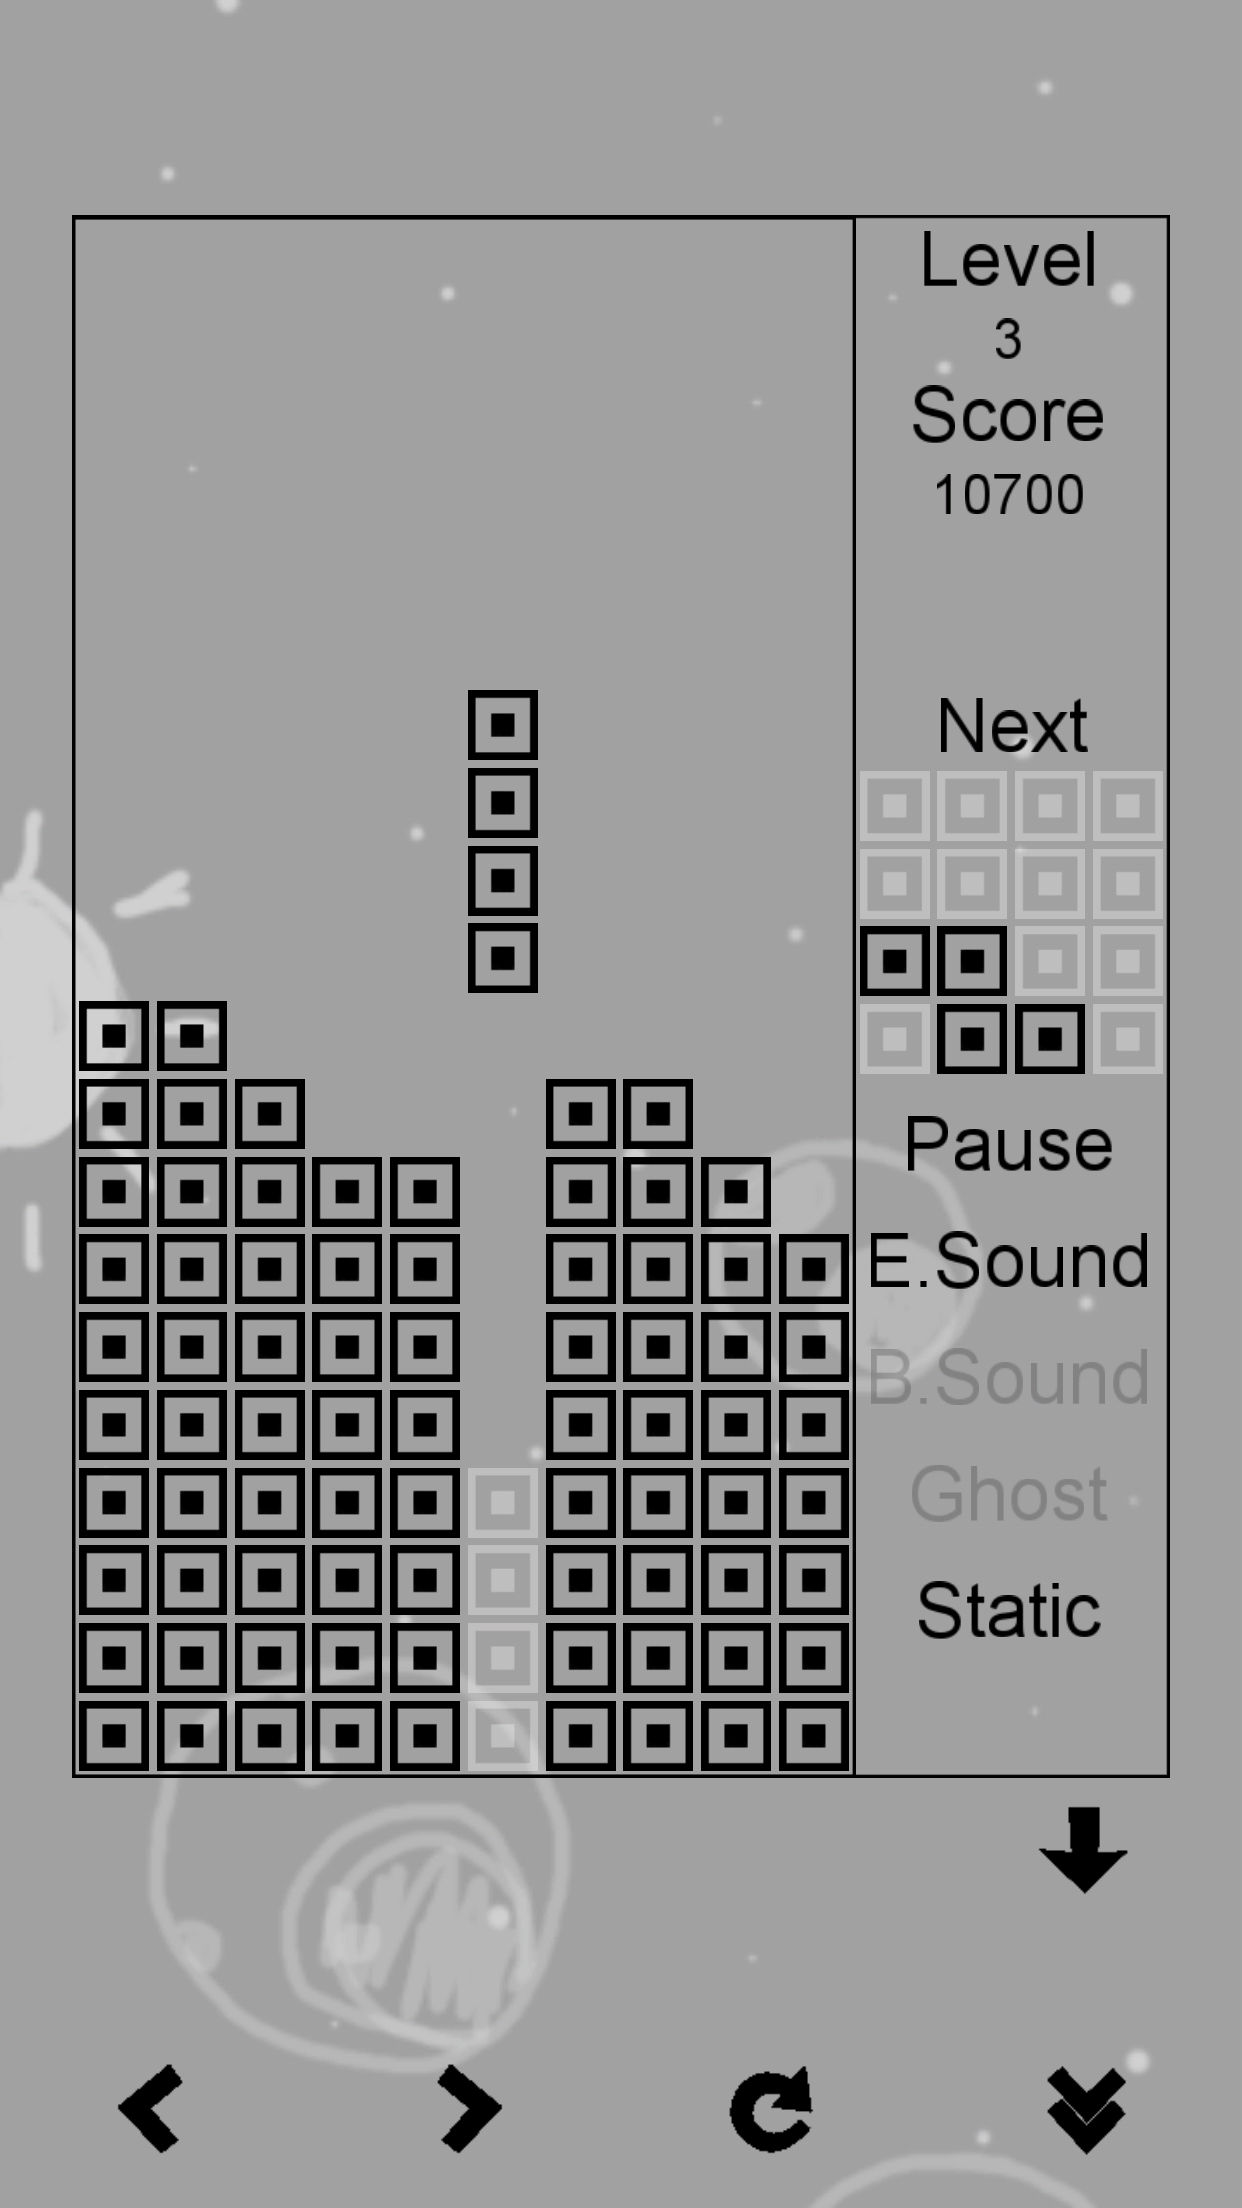 Screenshot of Classic Blocks